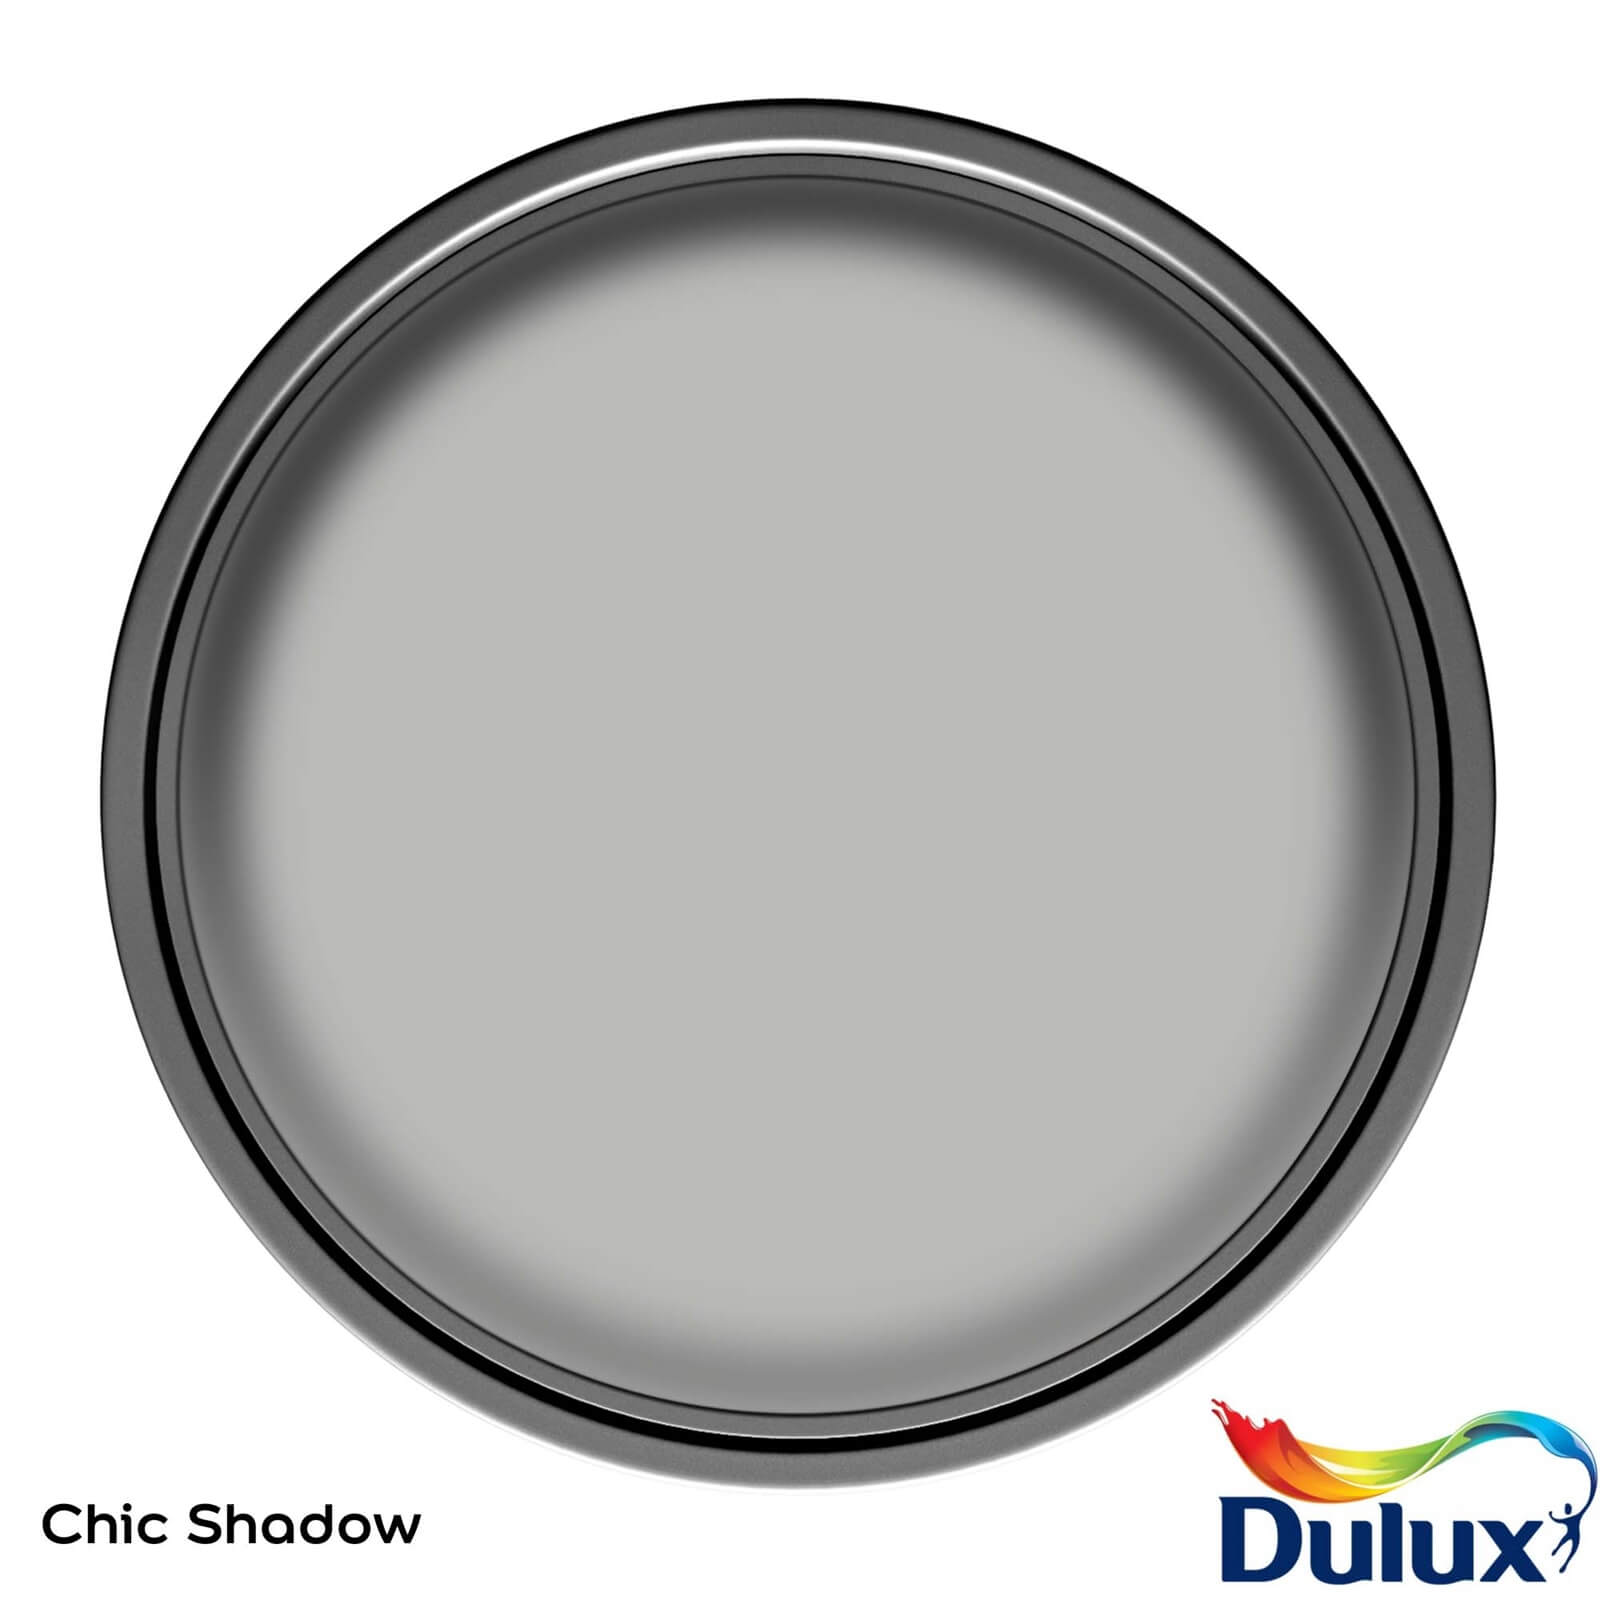 Dulux Weathershield Multi Surface Paint Chic Shadow - 750ml